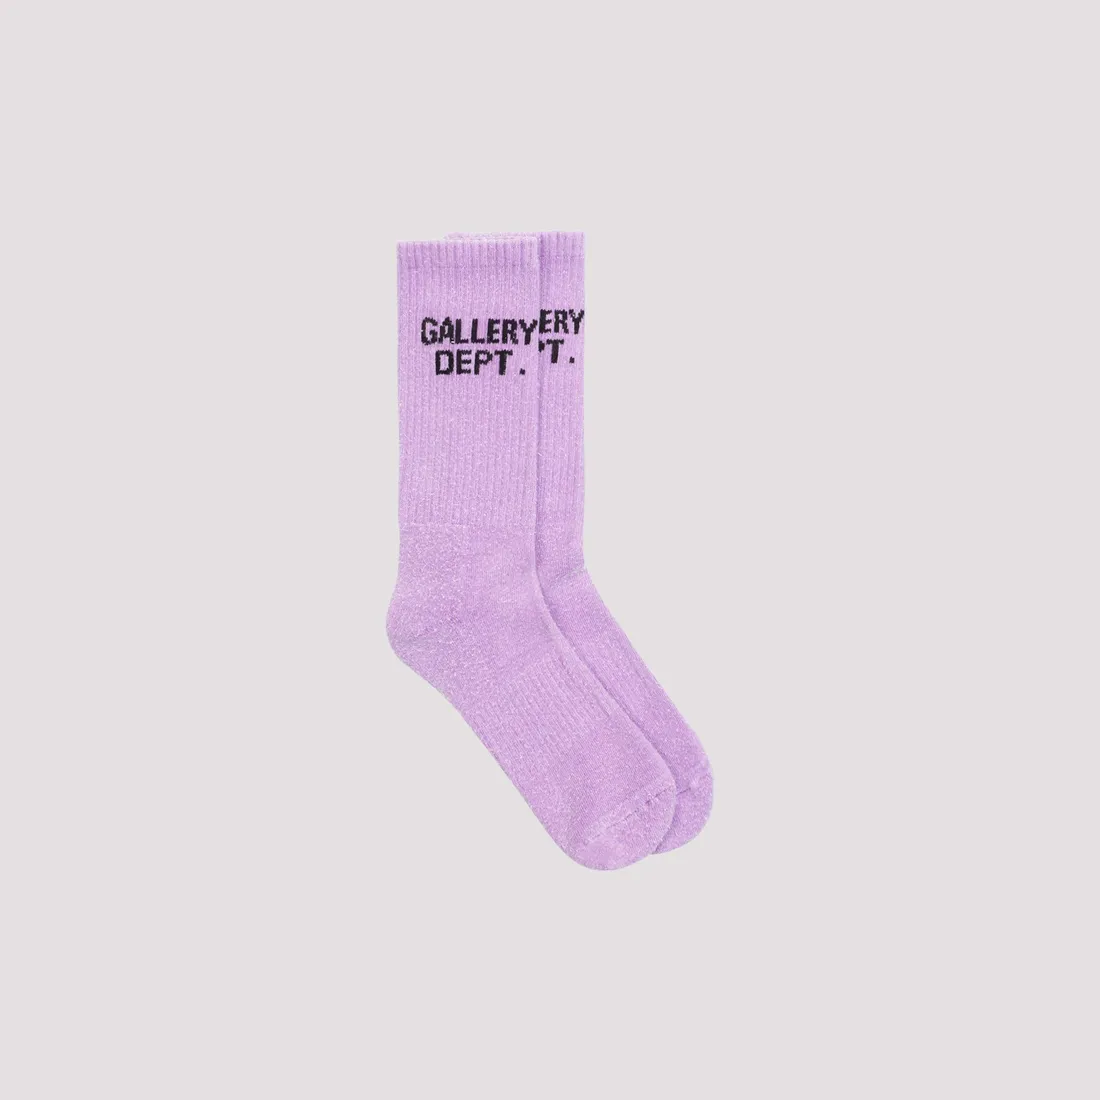 是非gallery dept logo socks purple